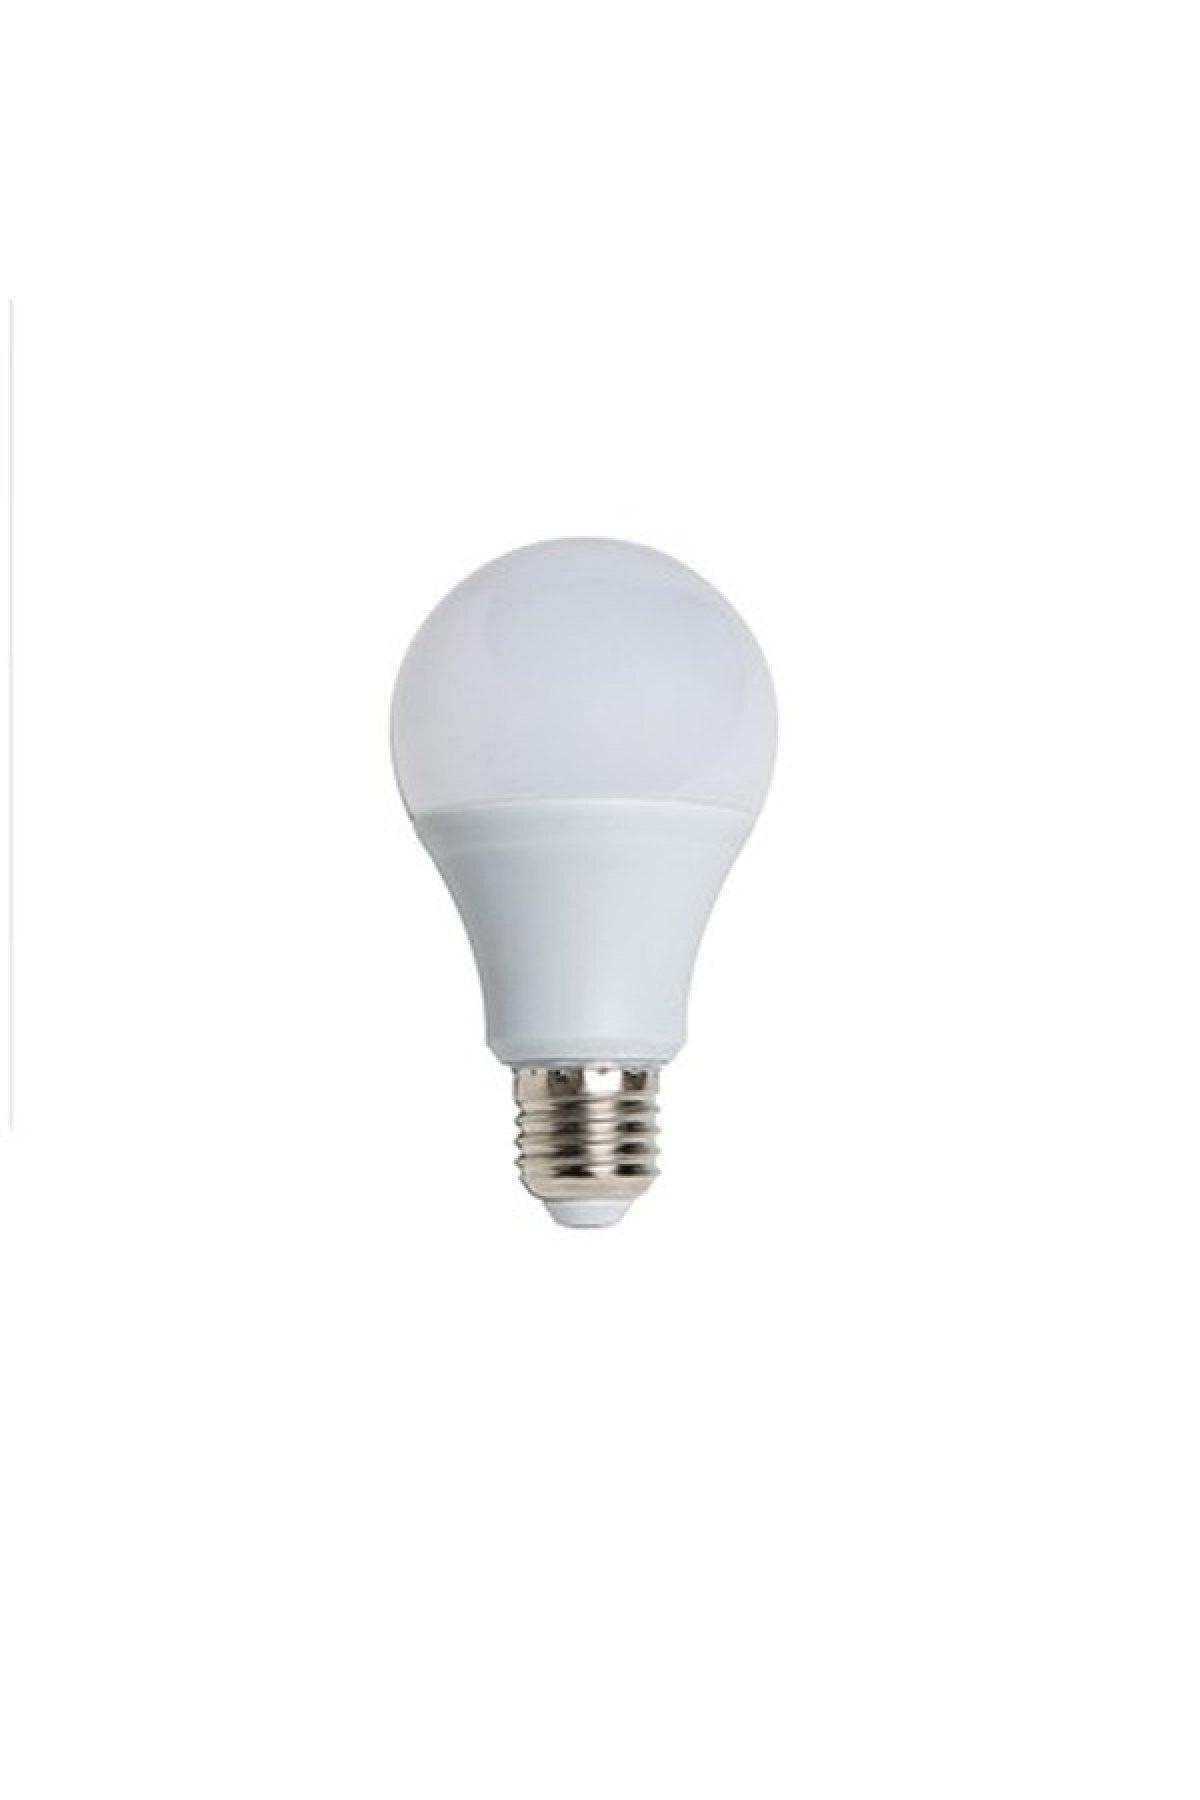 8.6 W (60w) Led Bulb Light Normal Socket 10